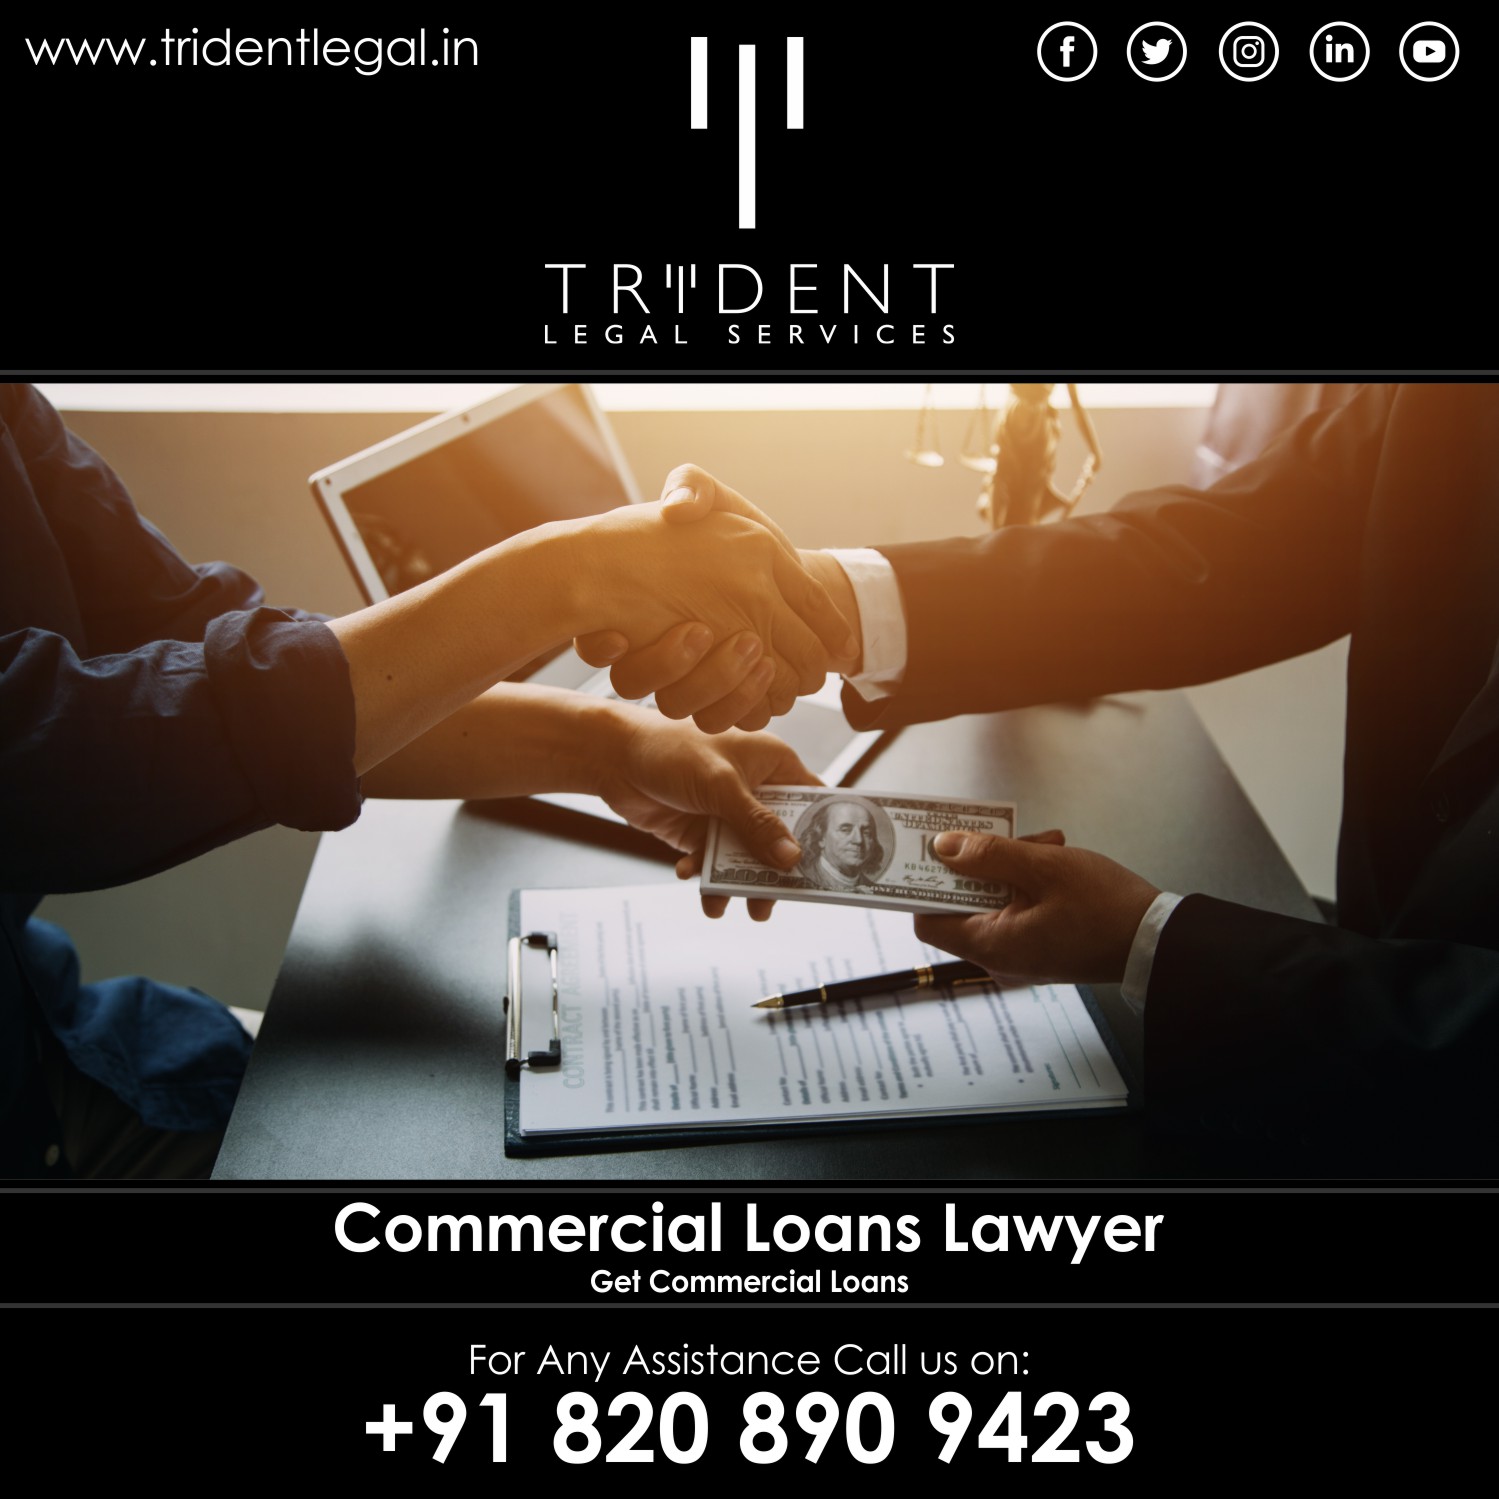 Commercial Loans Lawyer in Pune